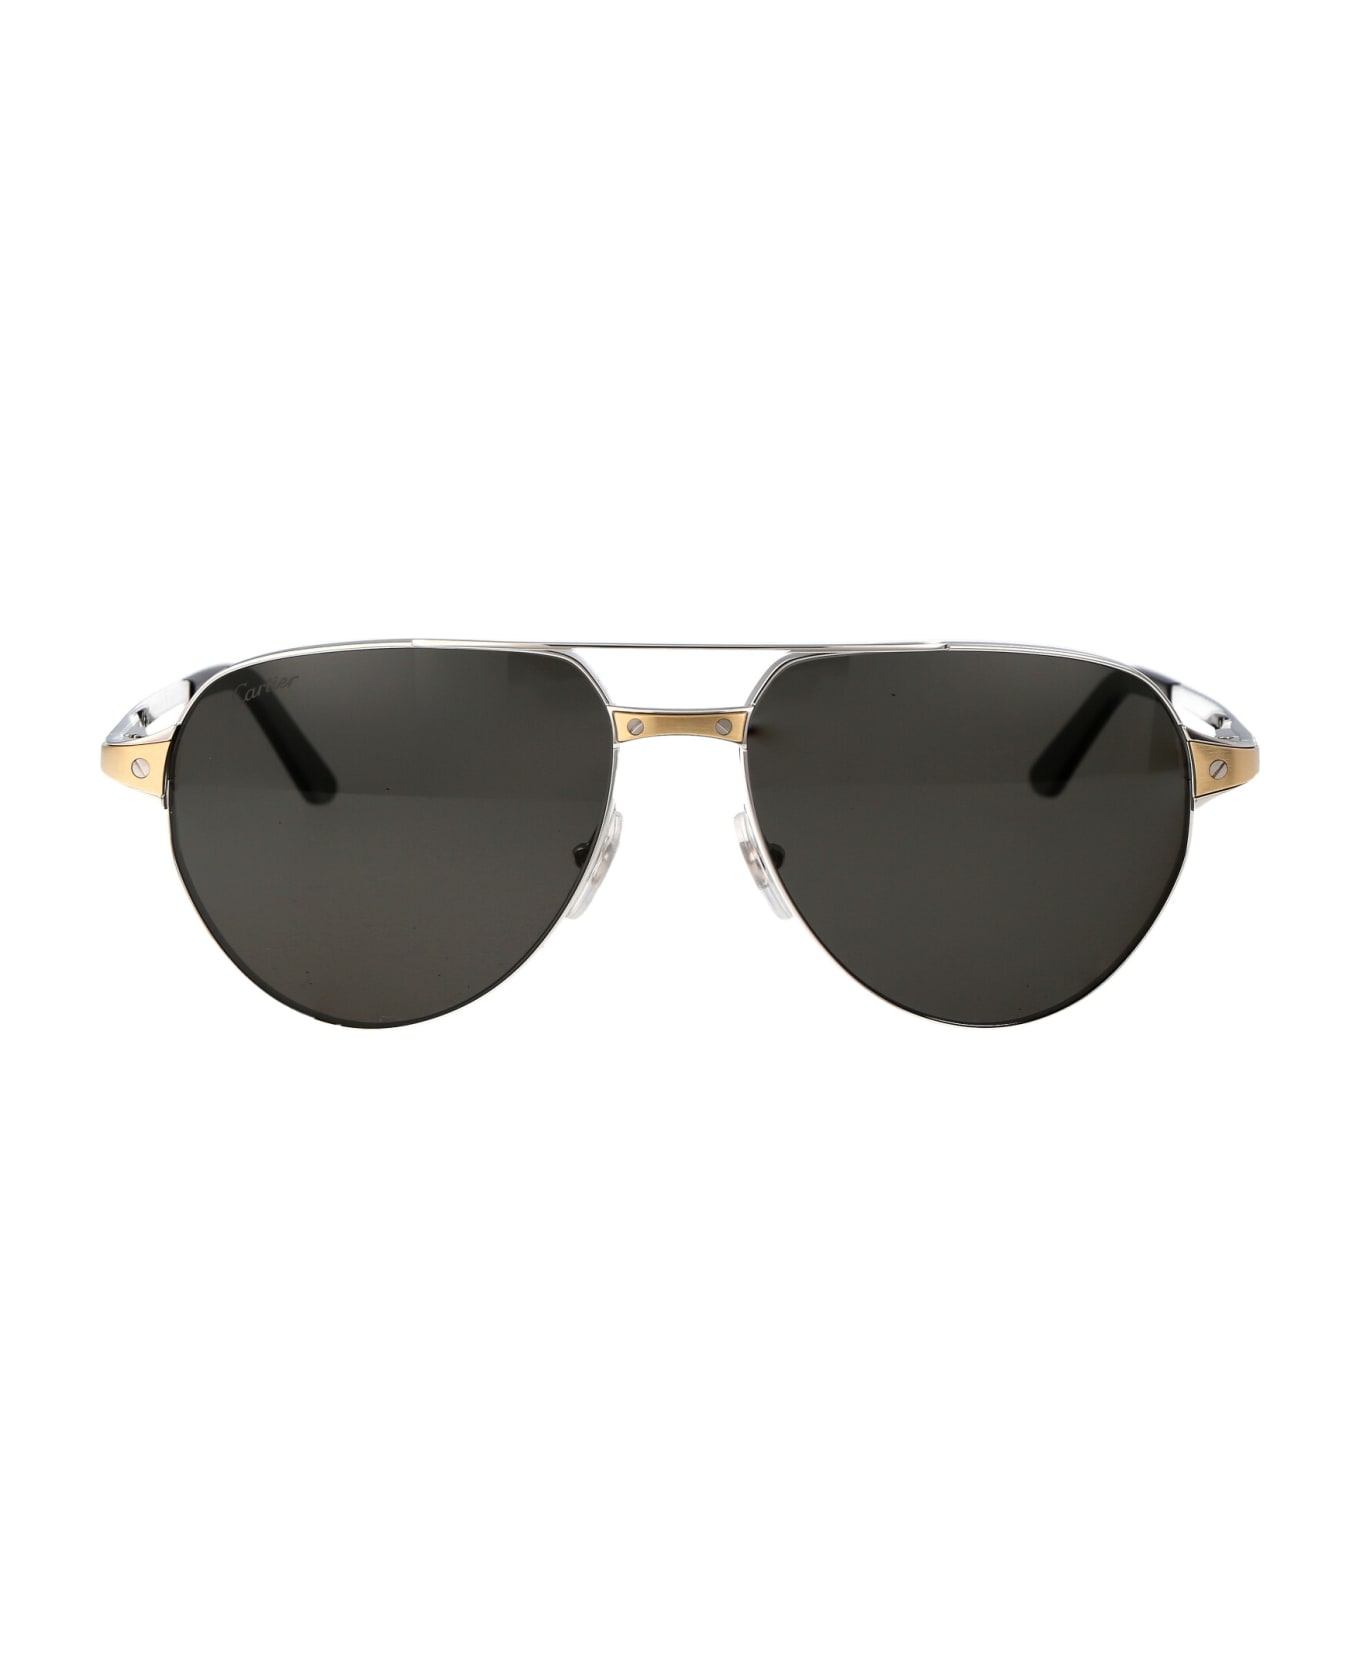 Cartier Eyewear Ct0425s Sunglasses - 001 SILVER SILVER SMOKE サングラス